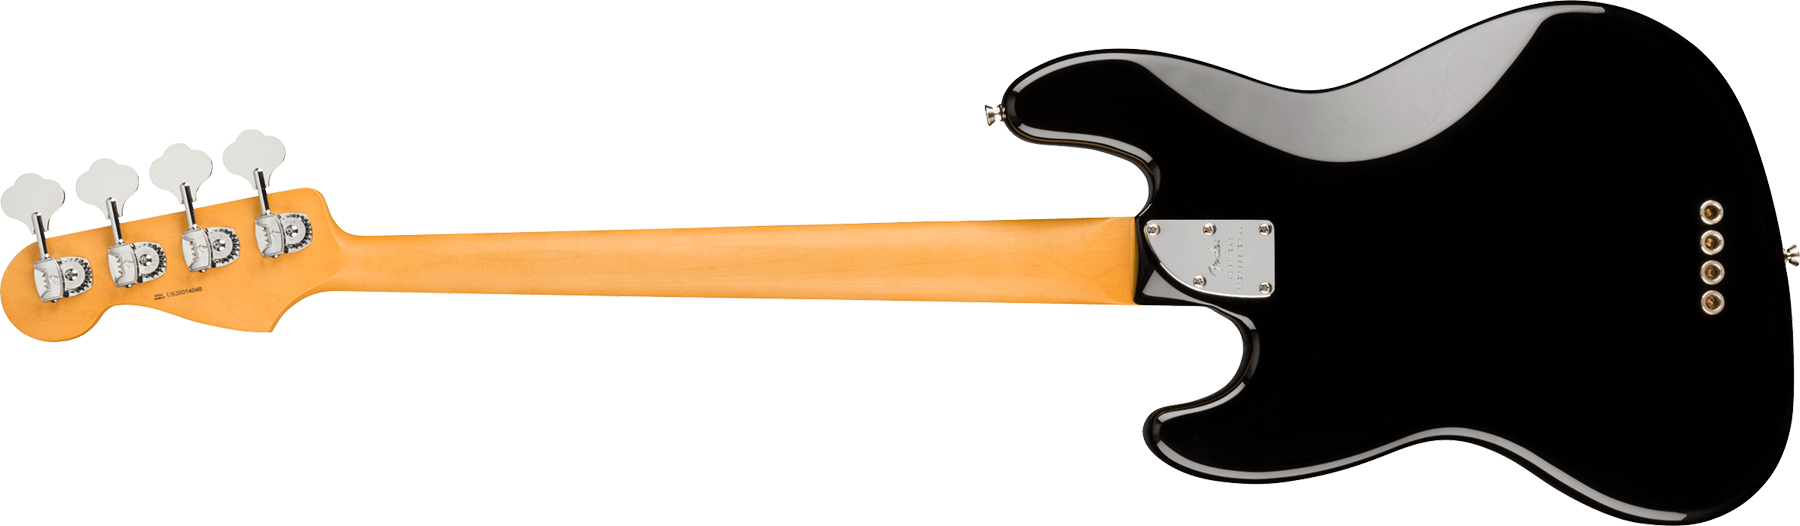 Fender Jazz Bass American Professional Ii Usa Rw - Black - Solid body electric bass - Variation 1